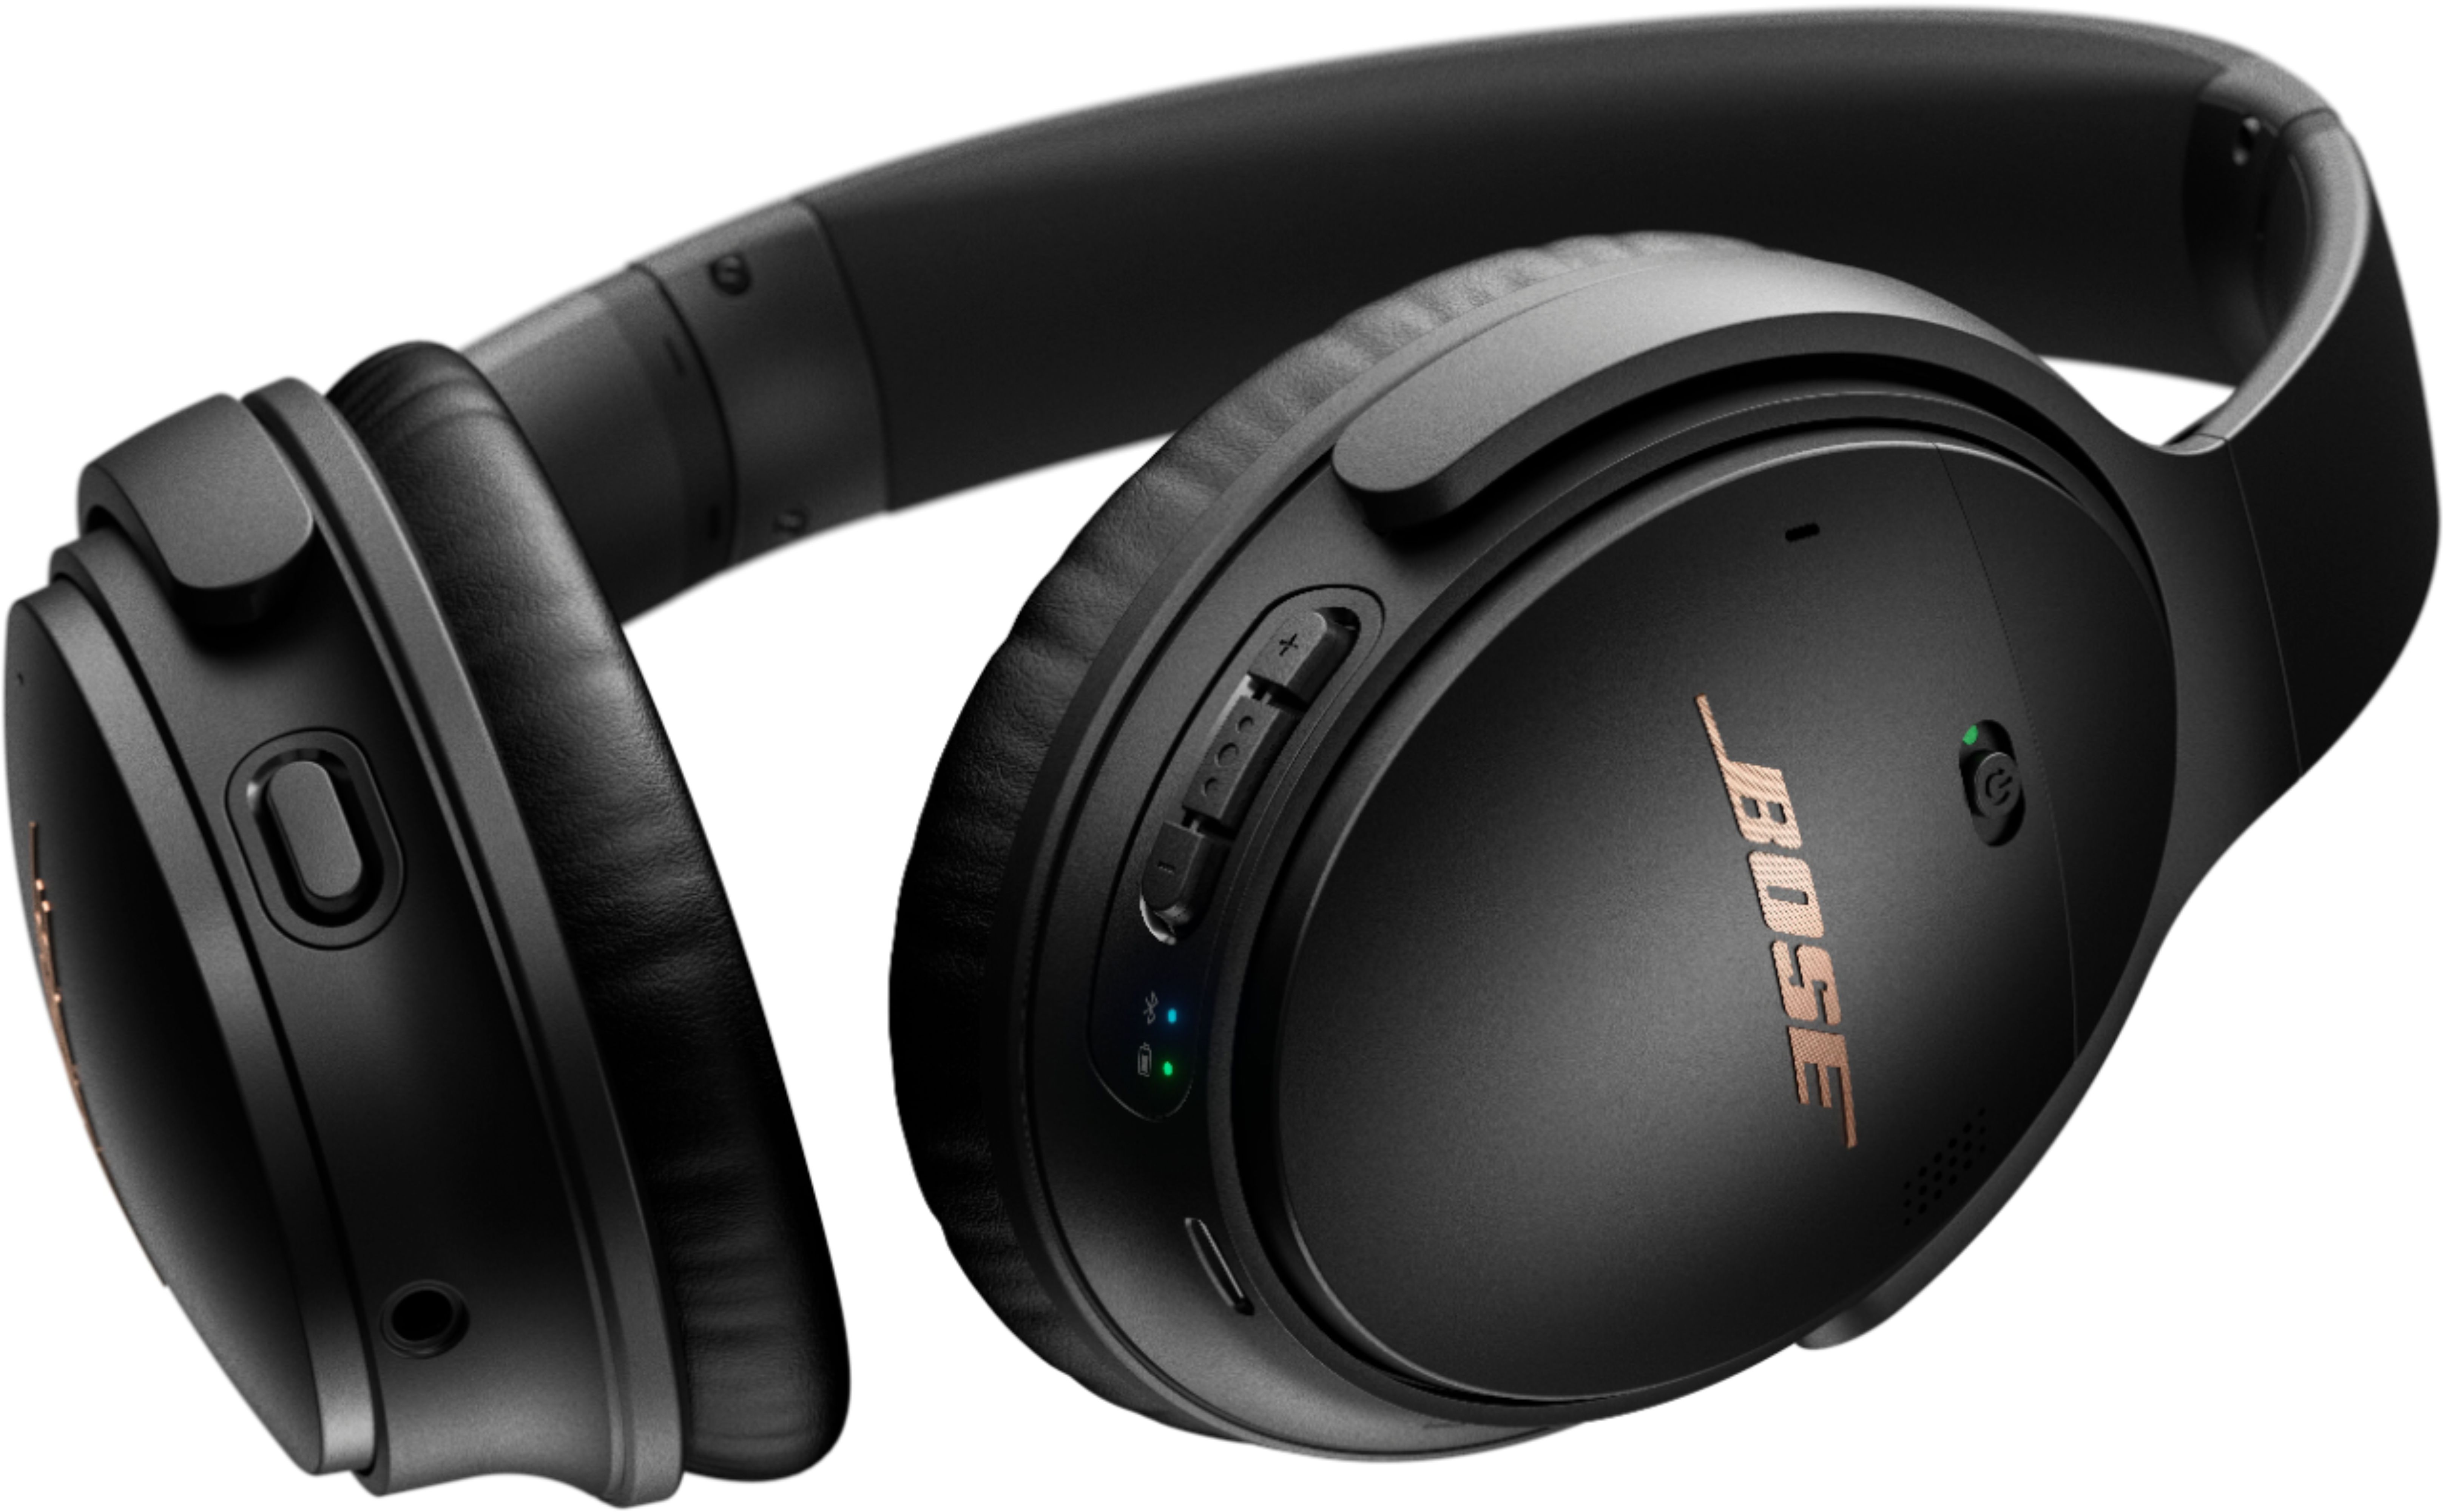 Underlegen Manøvre Folde Best Buy: Bose QuietComfort 35 II Wireless Noise Cancelling Gaming Headset  Black 852061-0010